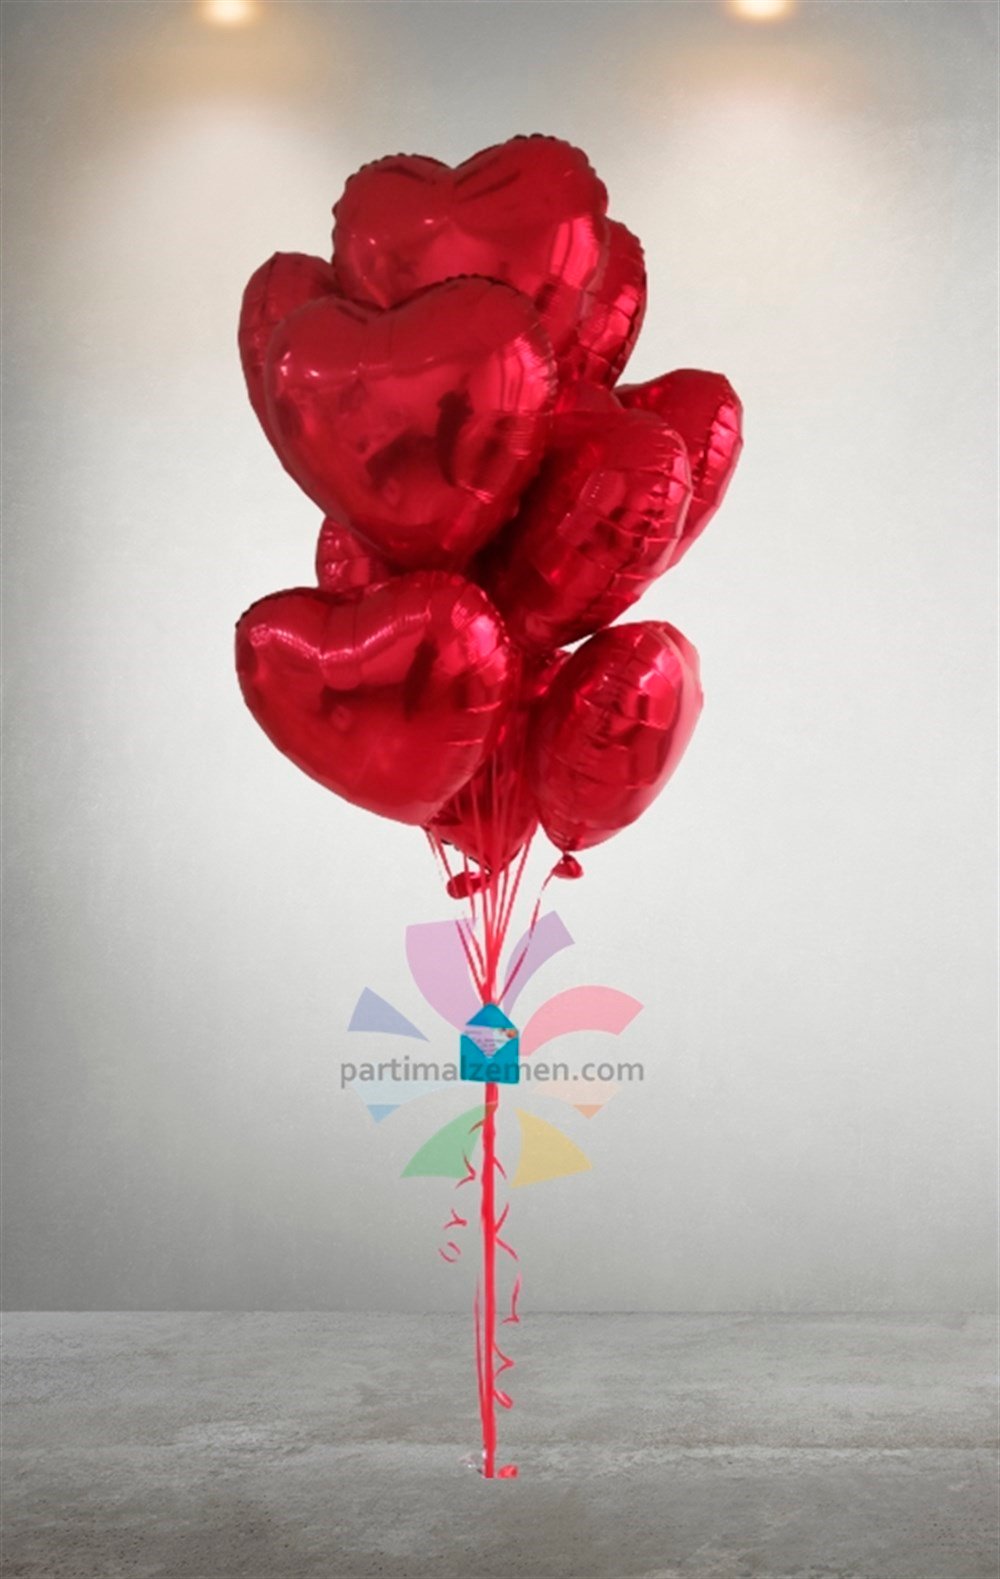 Kalpli Folyo Uçan Balon 20 Adet Adrese Teslim